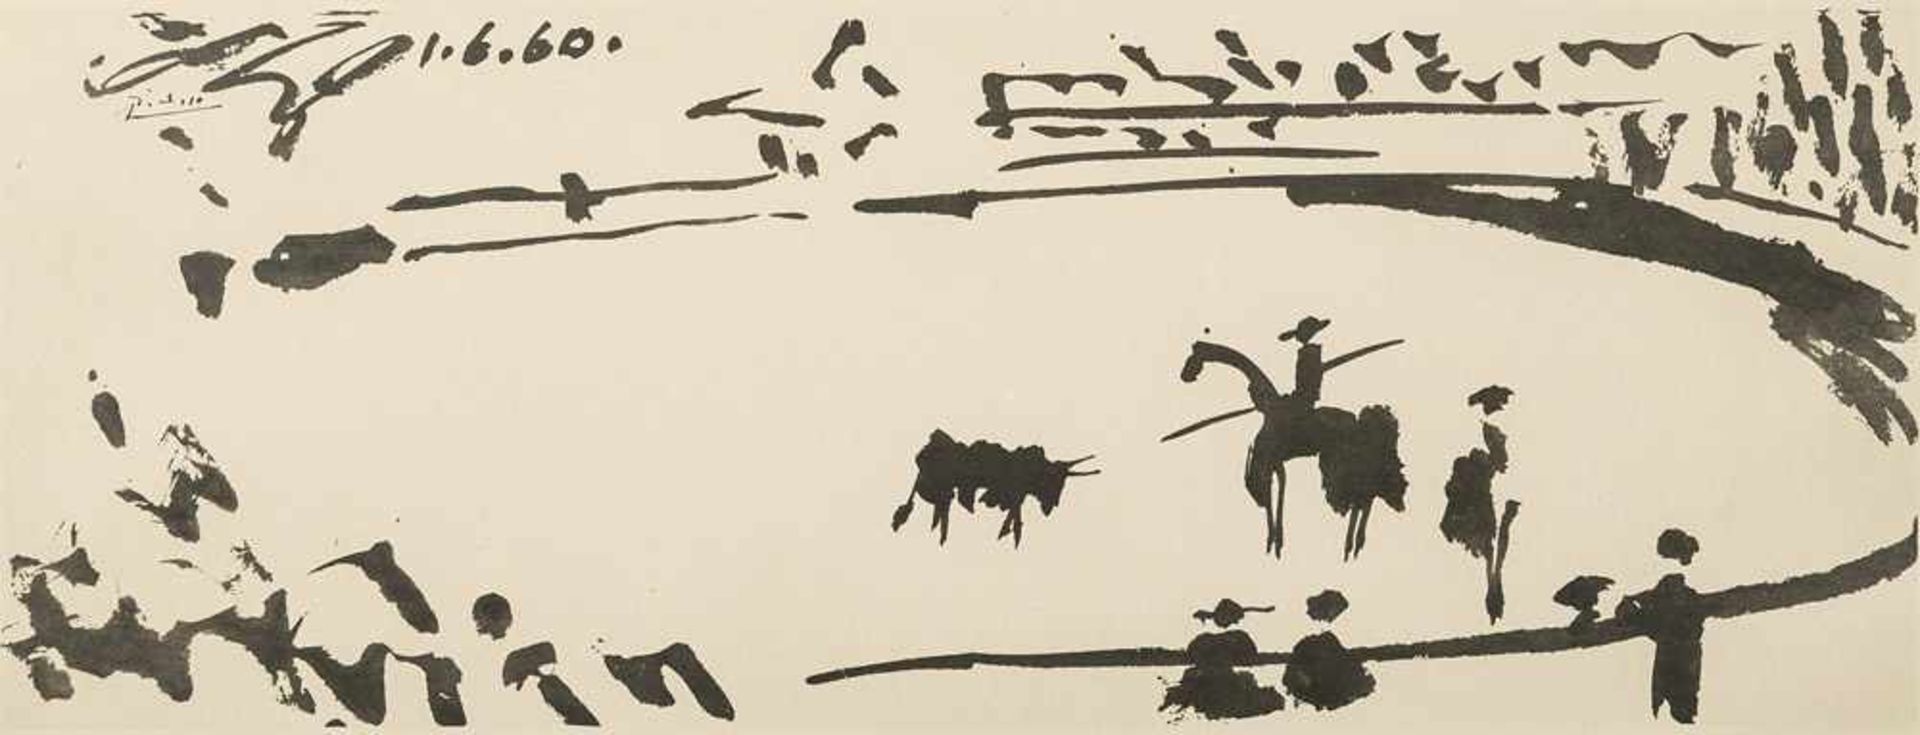 Picasso, PabloMalaga, 1881 - Mougins, 197329 x 75 cm,R.Stierkampf. Lithografie auf Bütt